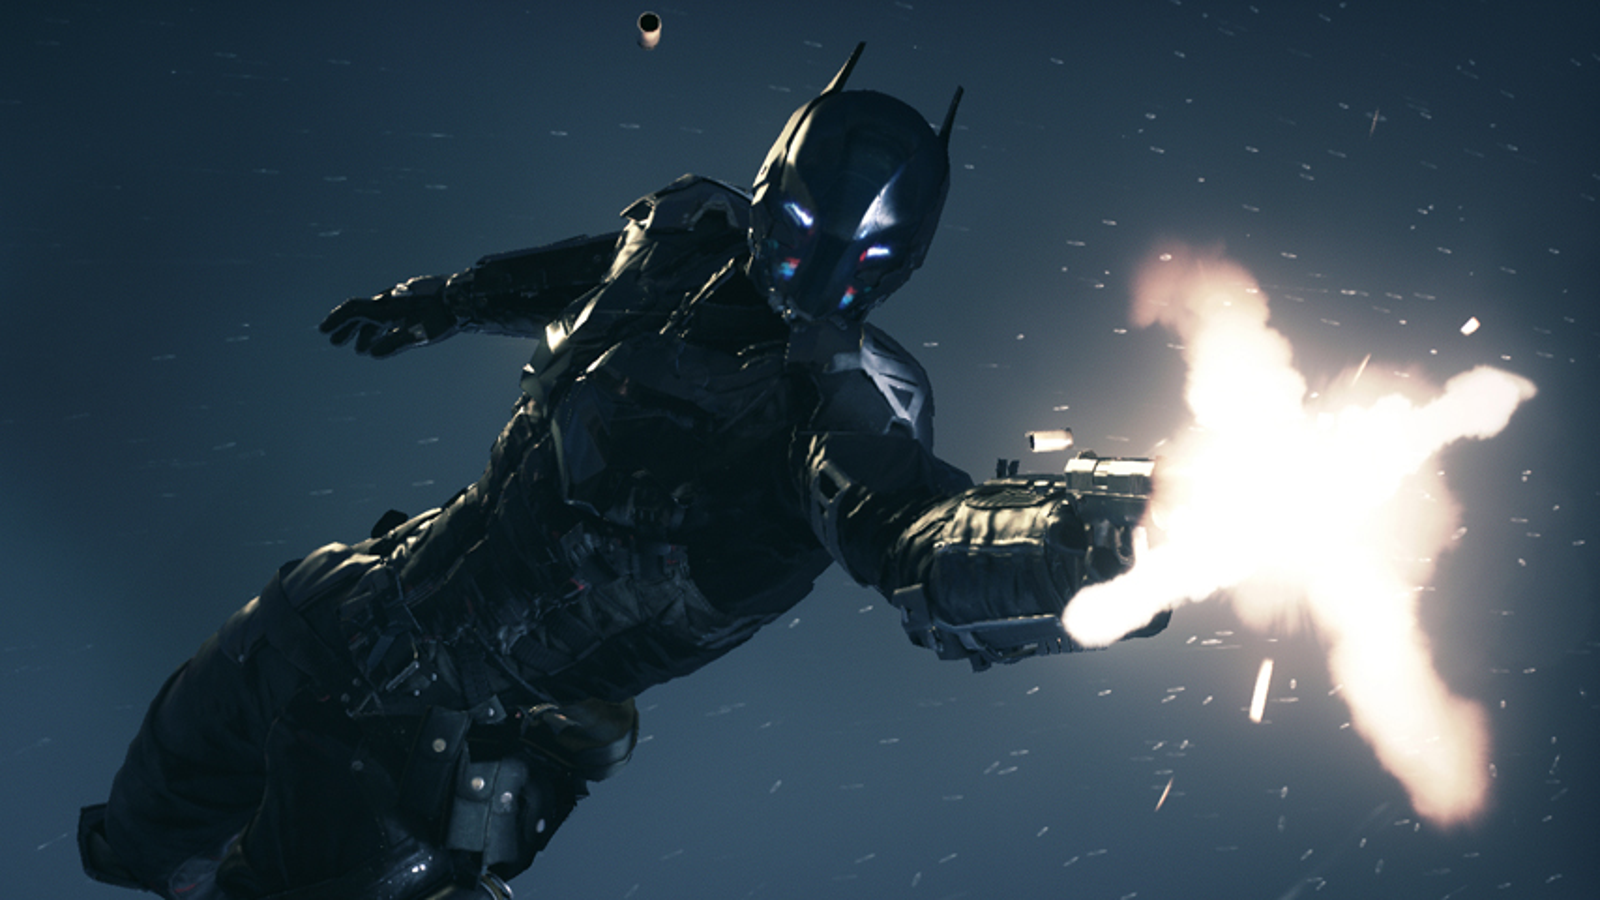 Batman: Arkham Knight is broken on PC